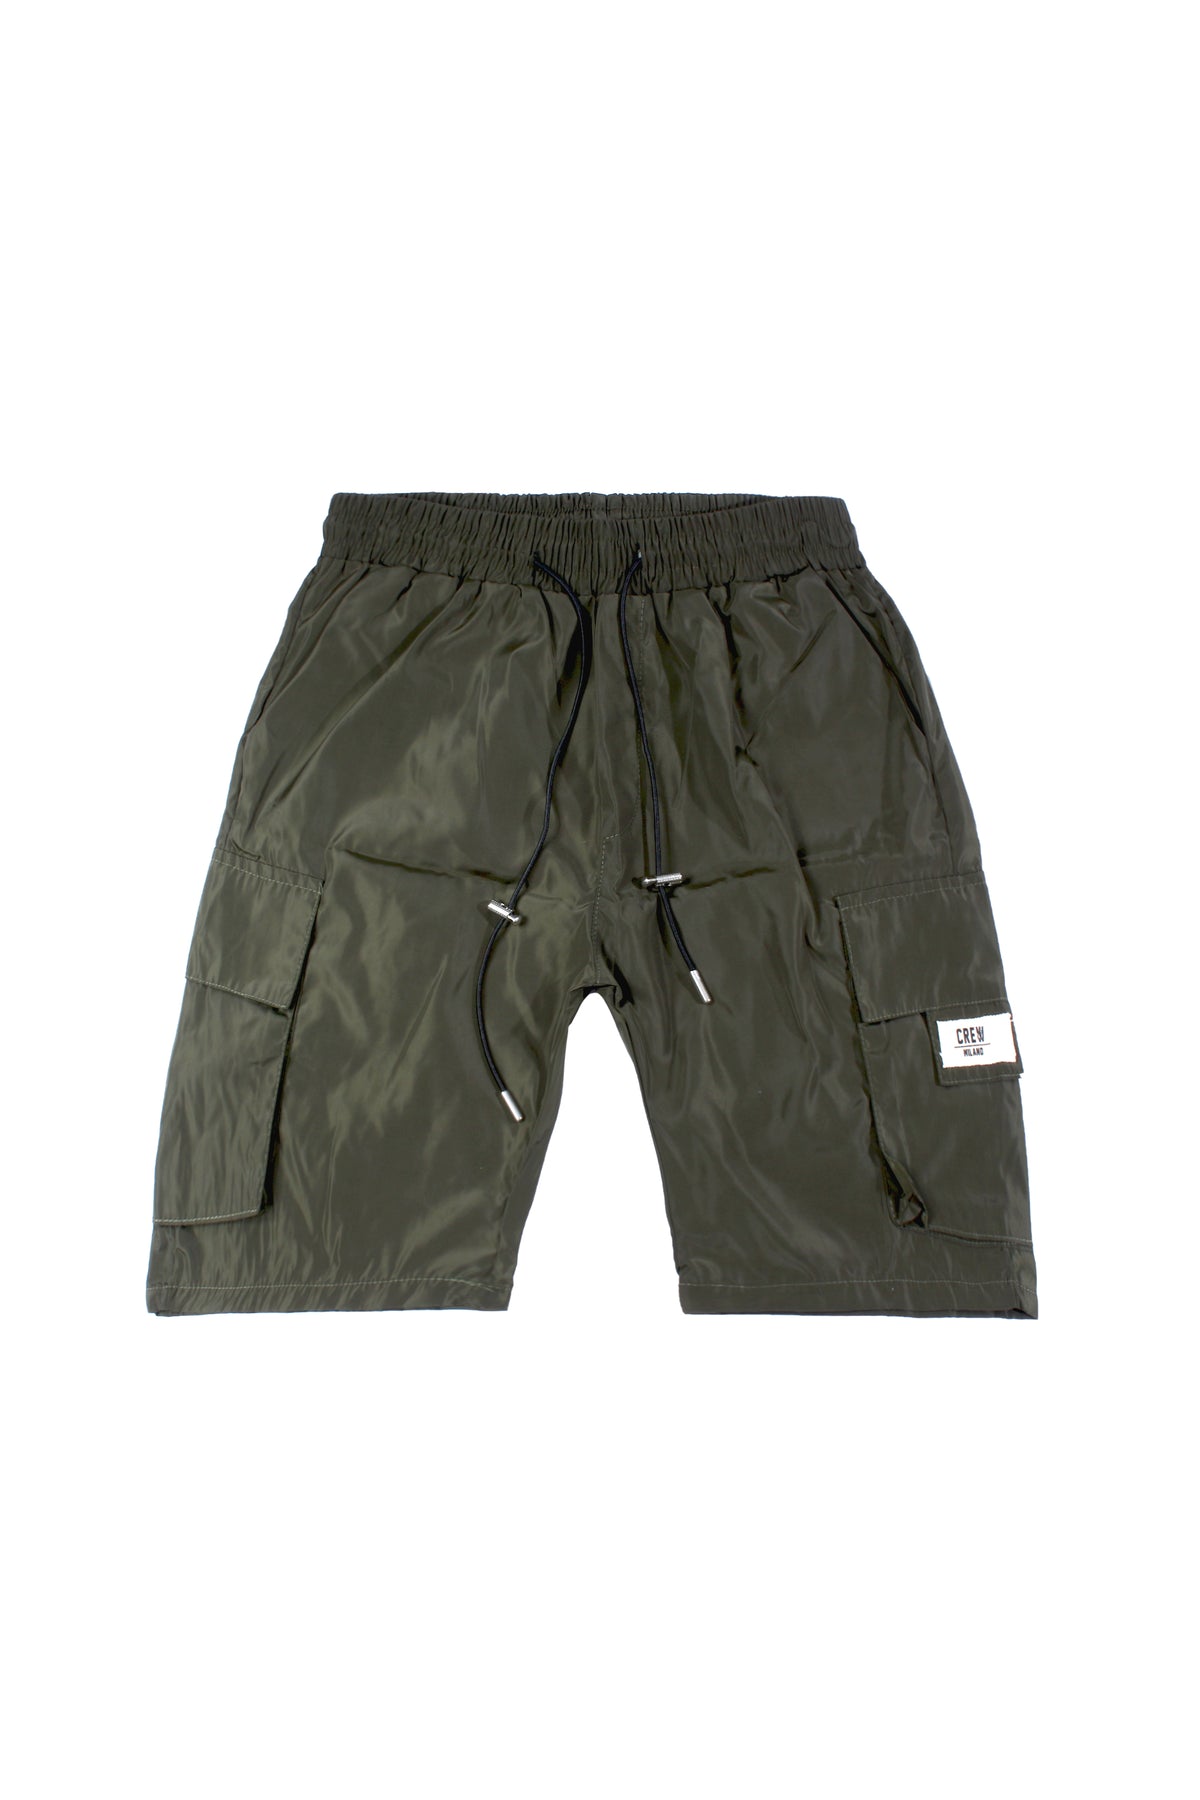 CREW Short Shine Cargo 2 Pockets Pants Green Olive